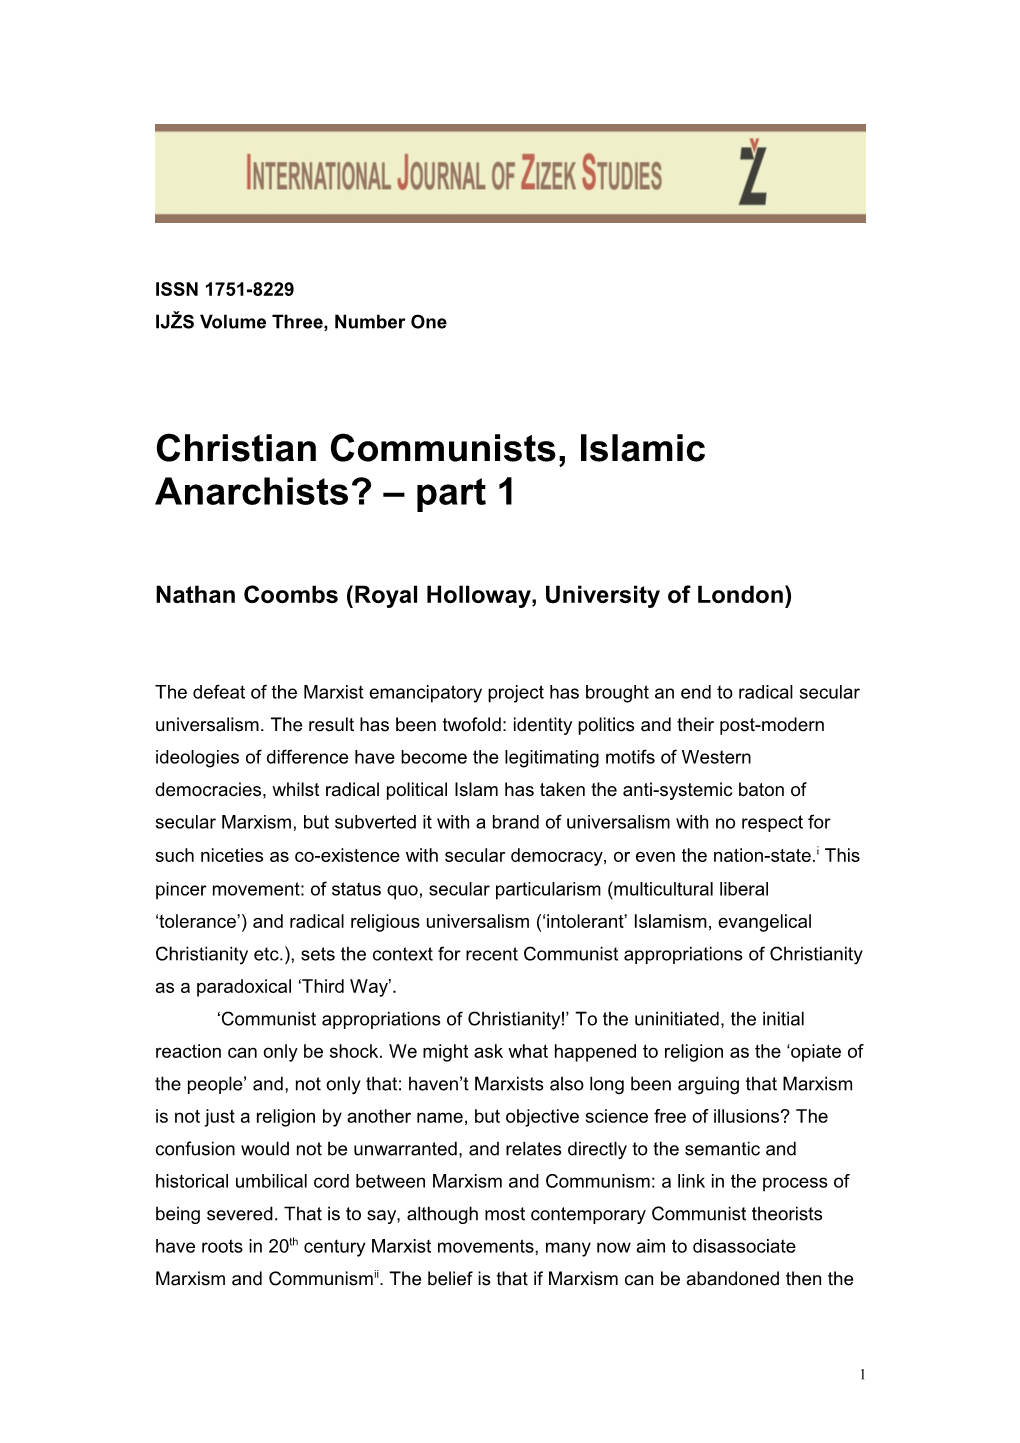 Christian Communists, Islamic Anarchists? – Part 1